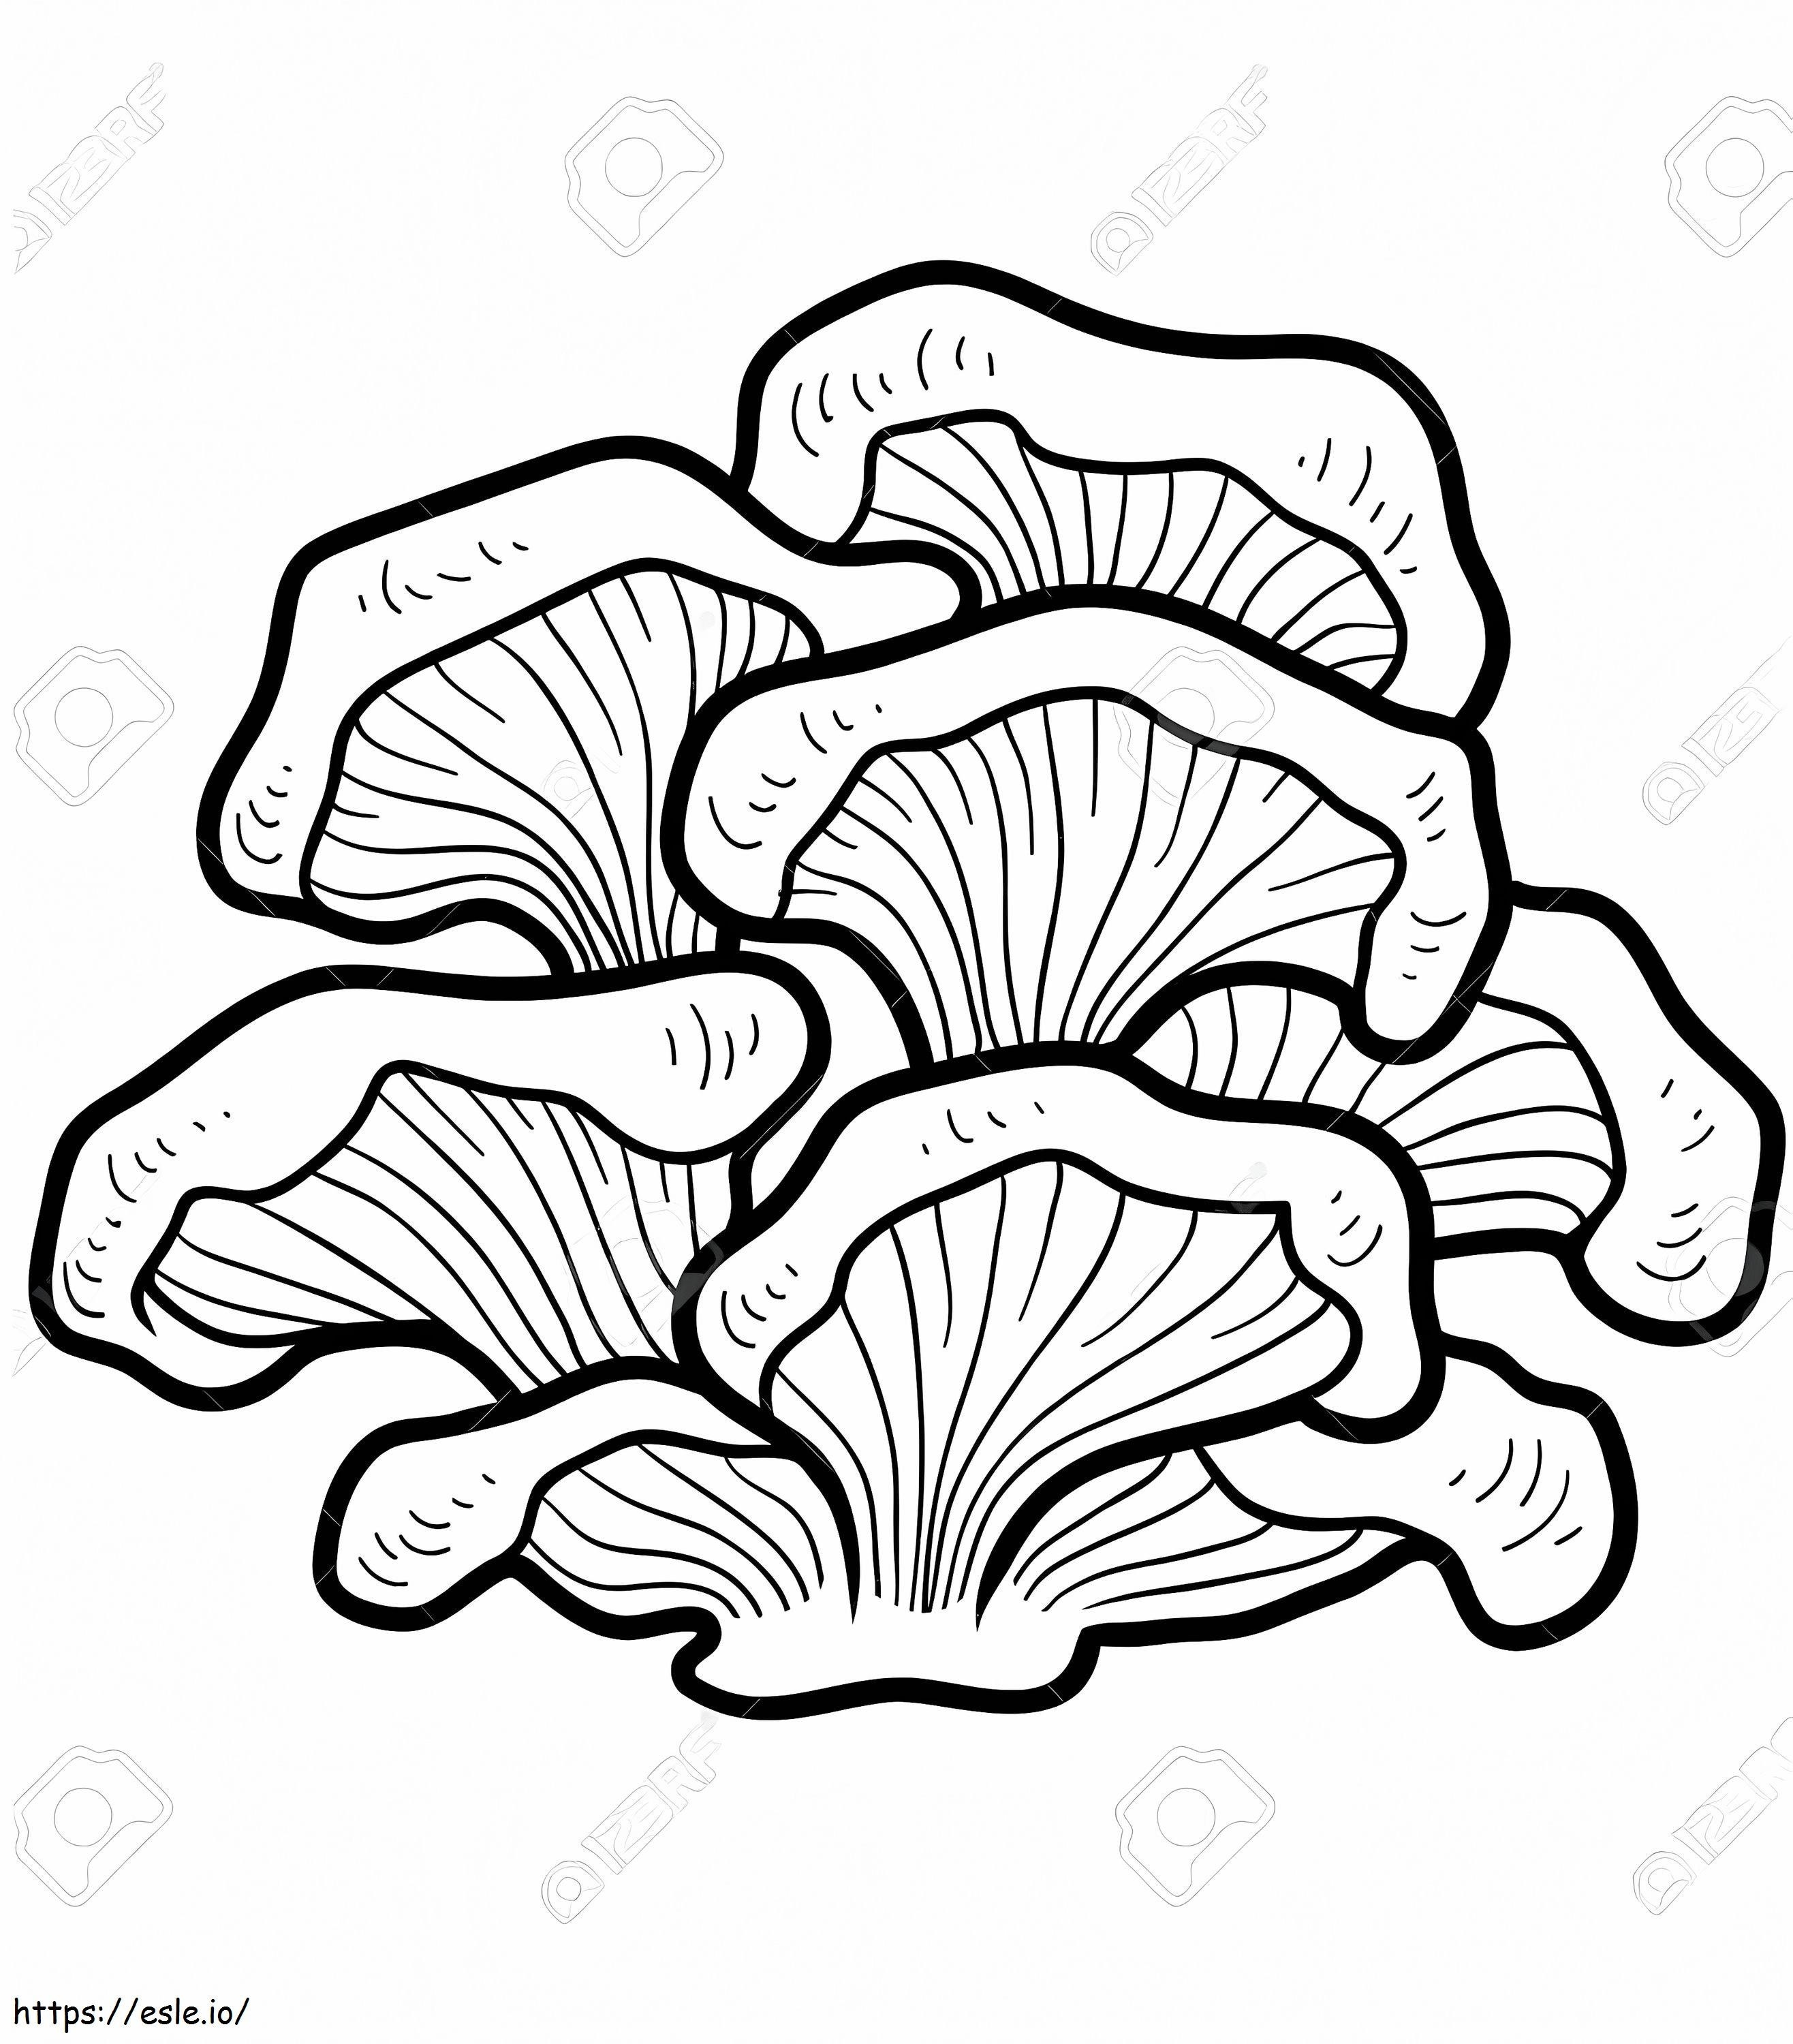 Pilze 3 ausmalbilder